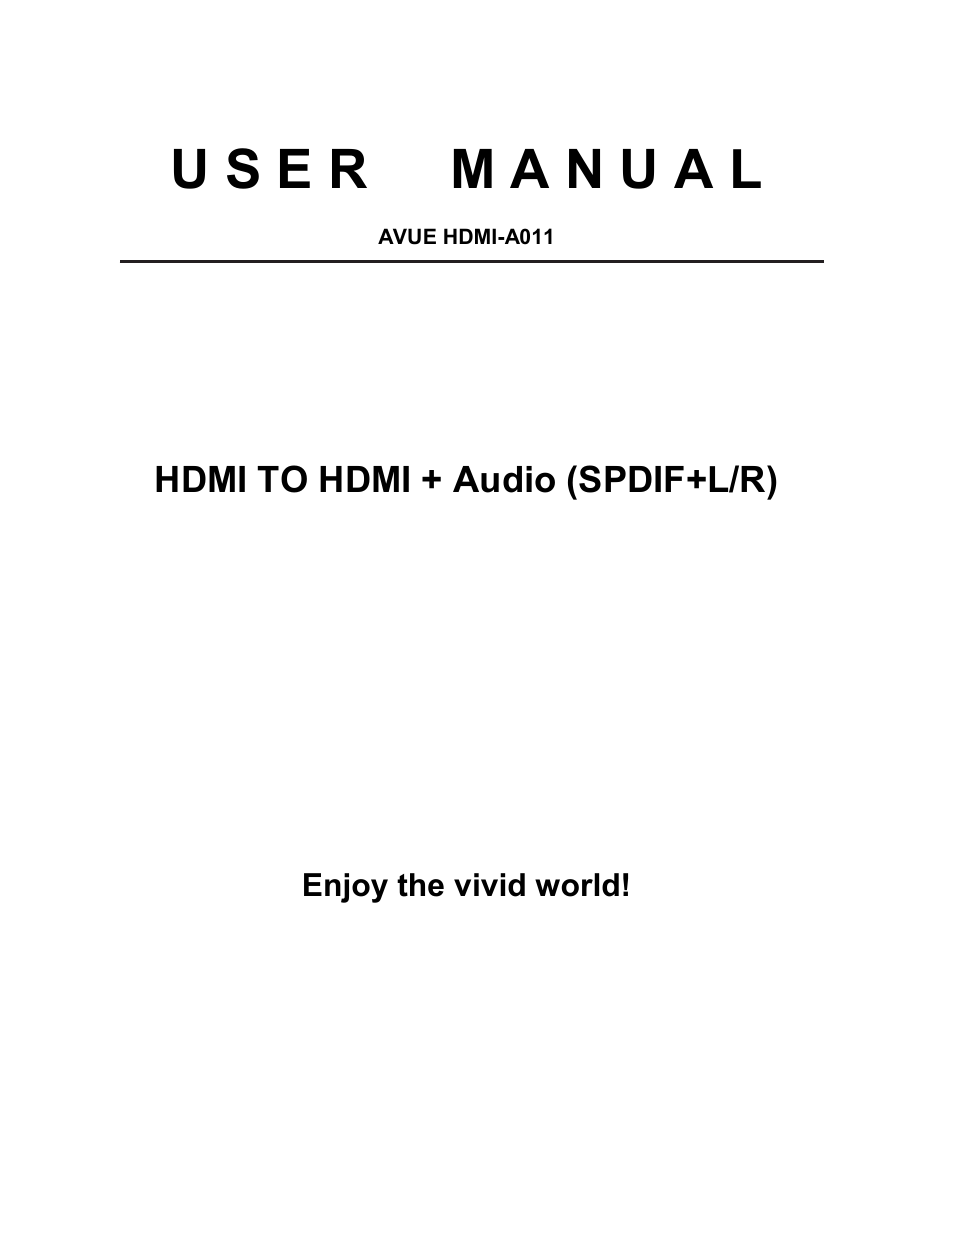 HDMI-A011 – HDMI TO HDMI+SPDIF+L/R